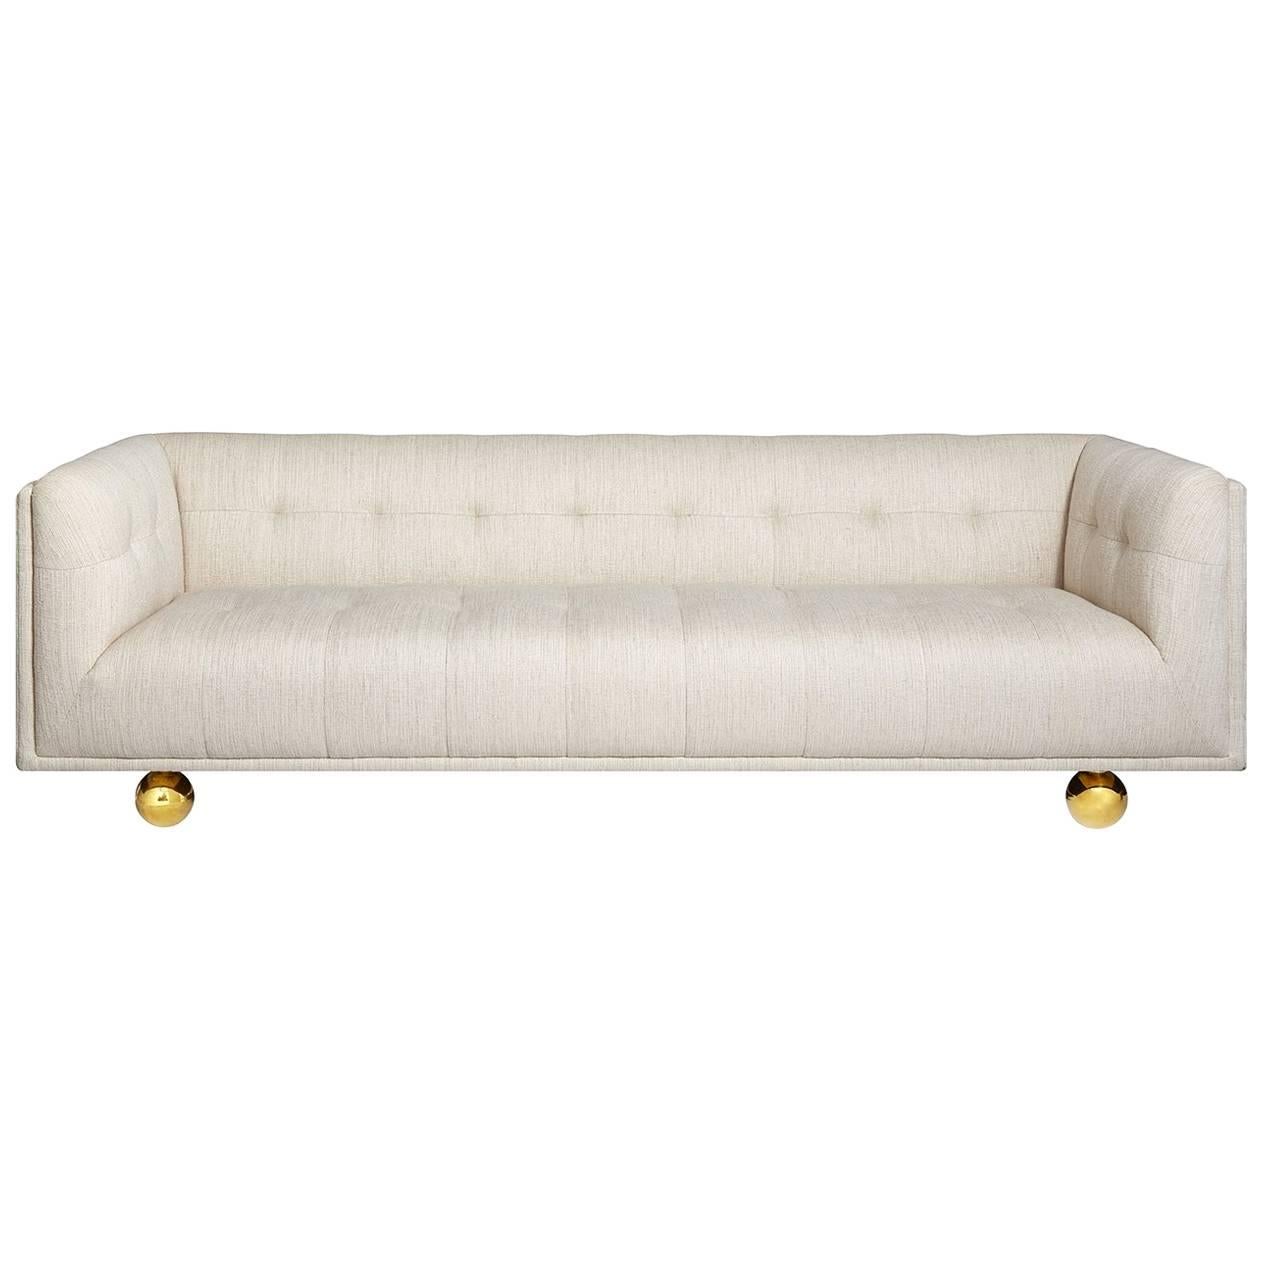 Claridge Modern Chesterfield Sofa in Ivory Linen